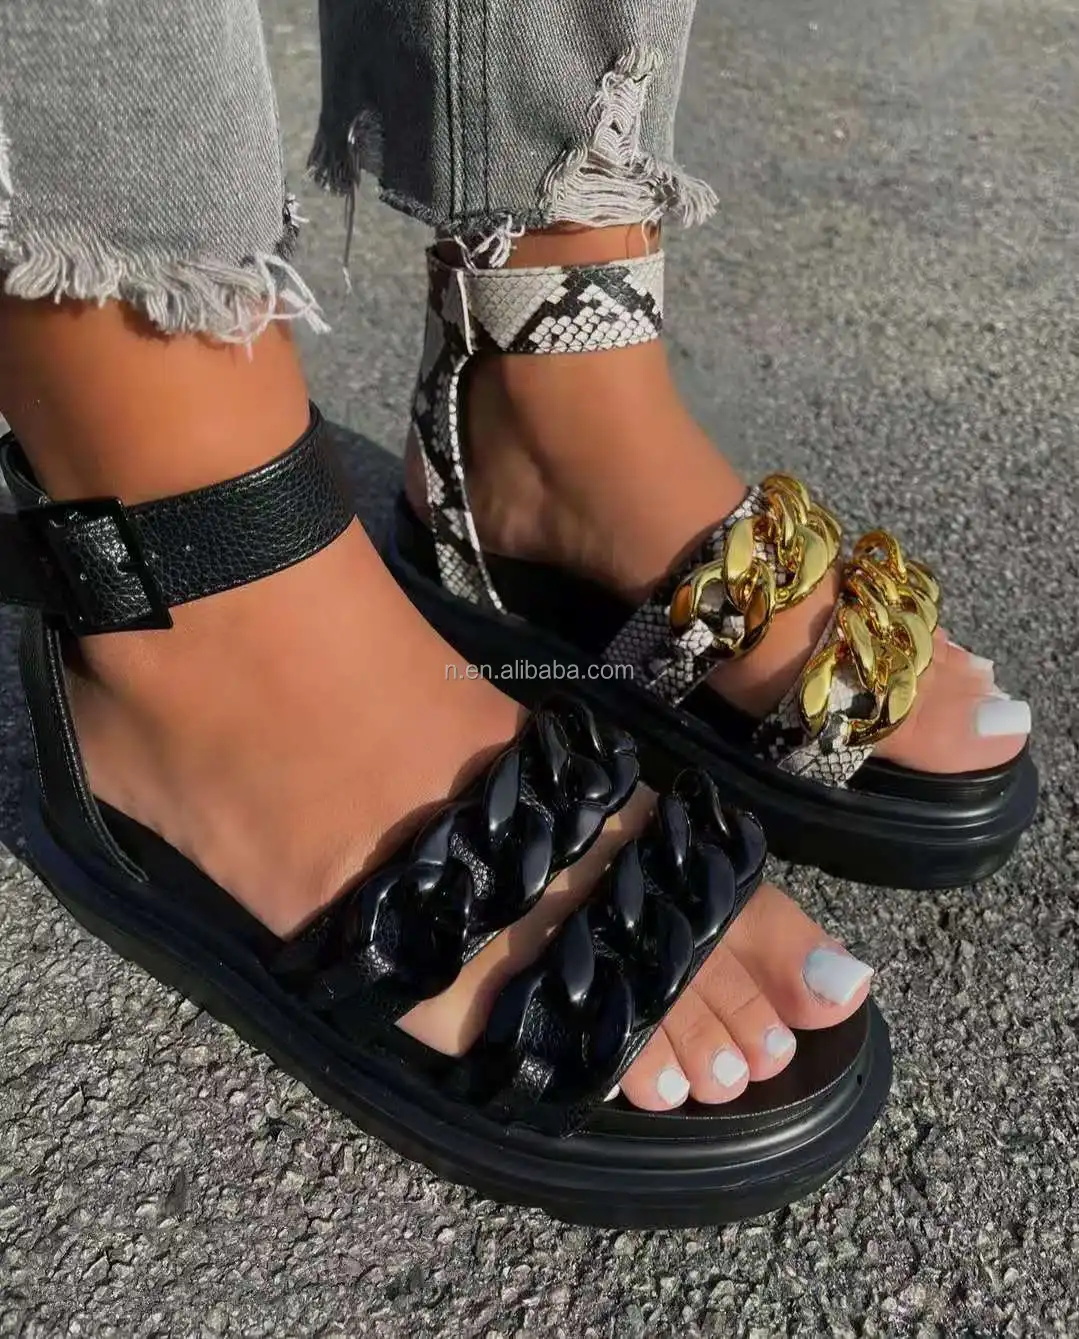 MEIZOKEN Shoes Women High Heel Sandals Platform Summer Non-Slip Beach Flip Flops Slippers Wedges Sandalias Femininas